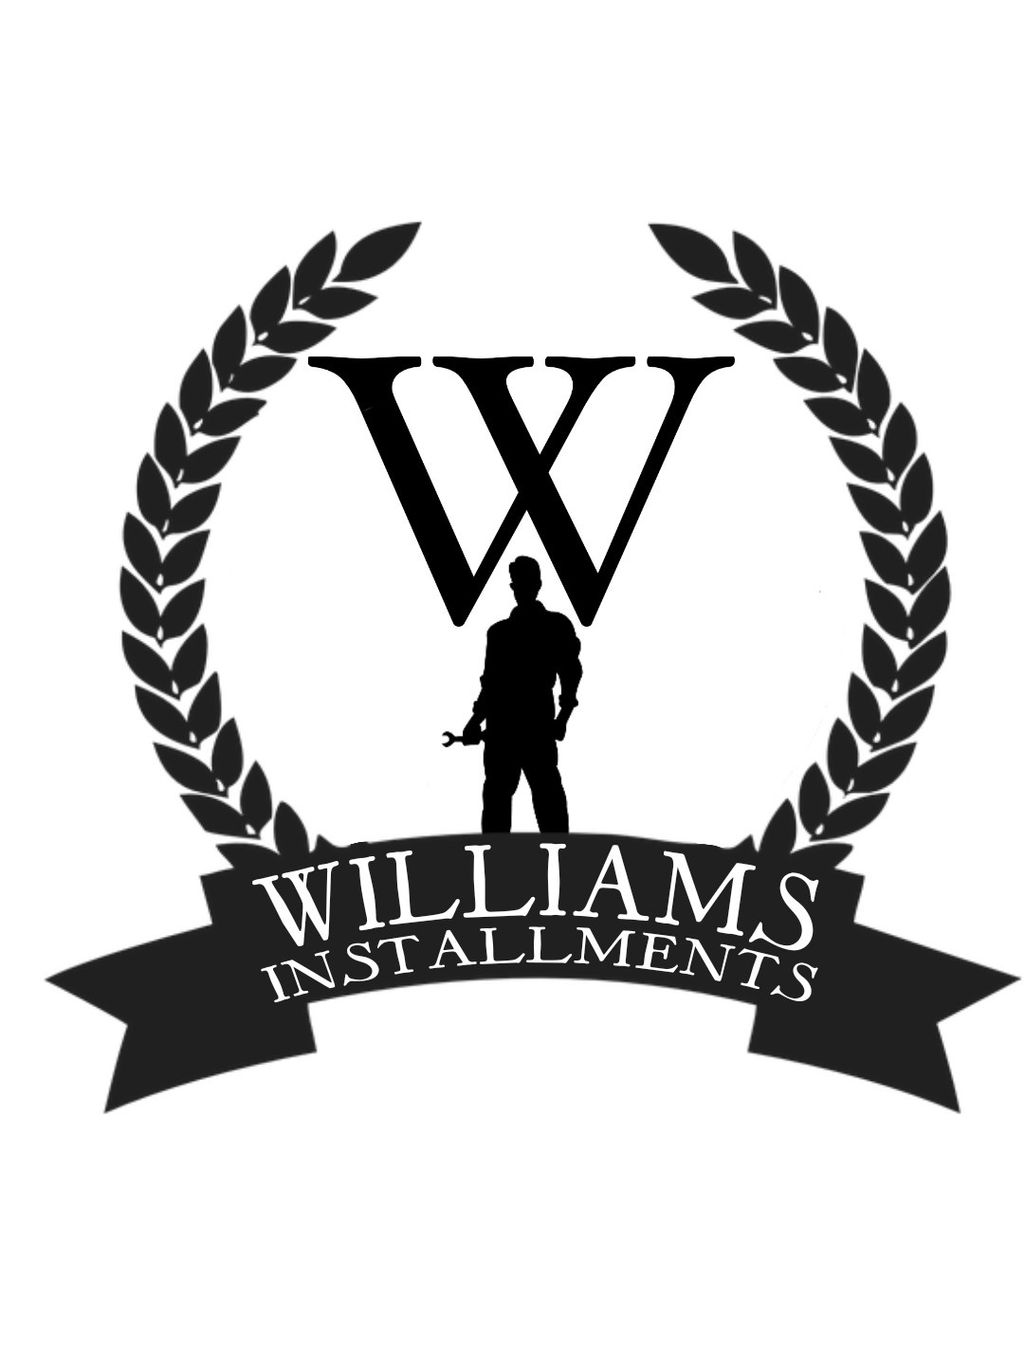 Williams installment